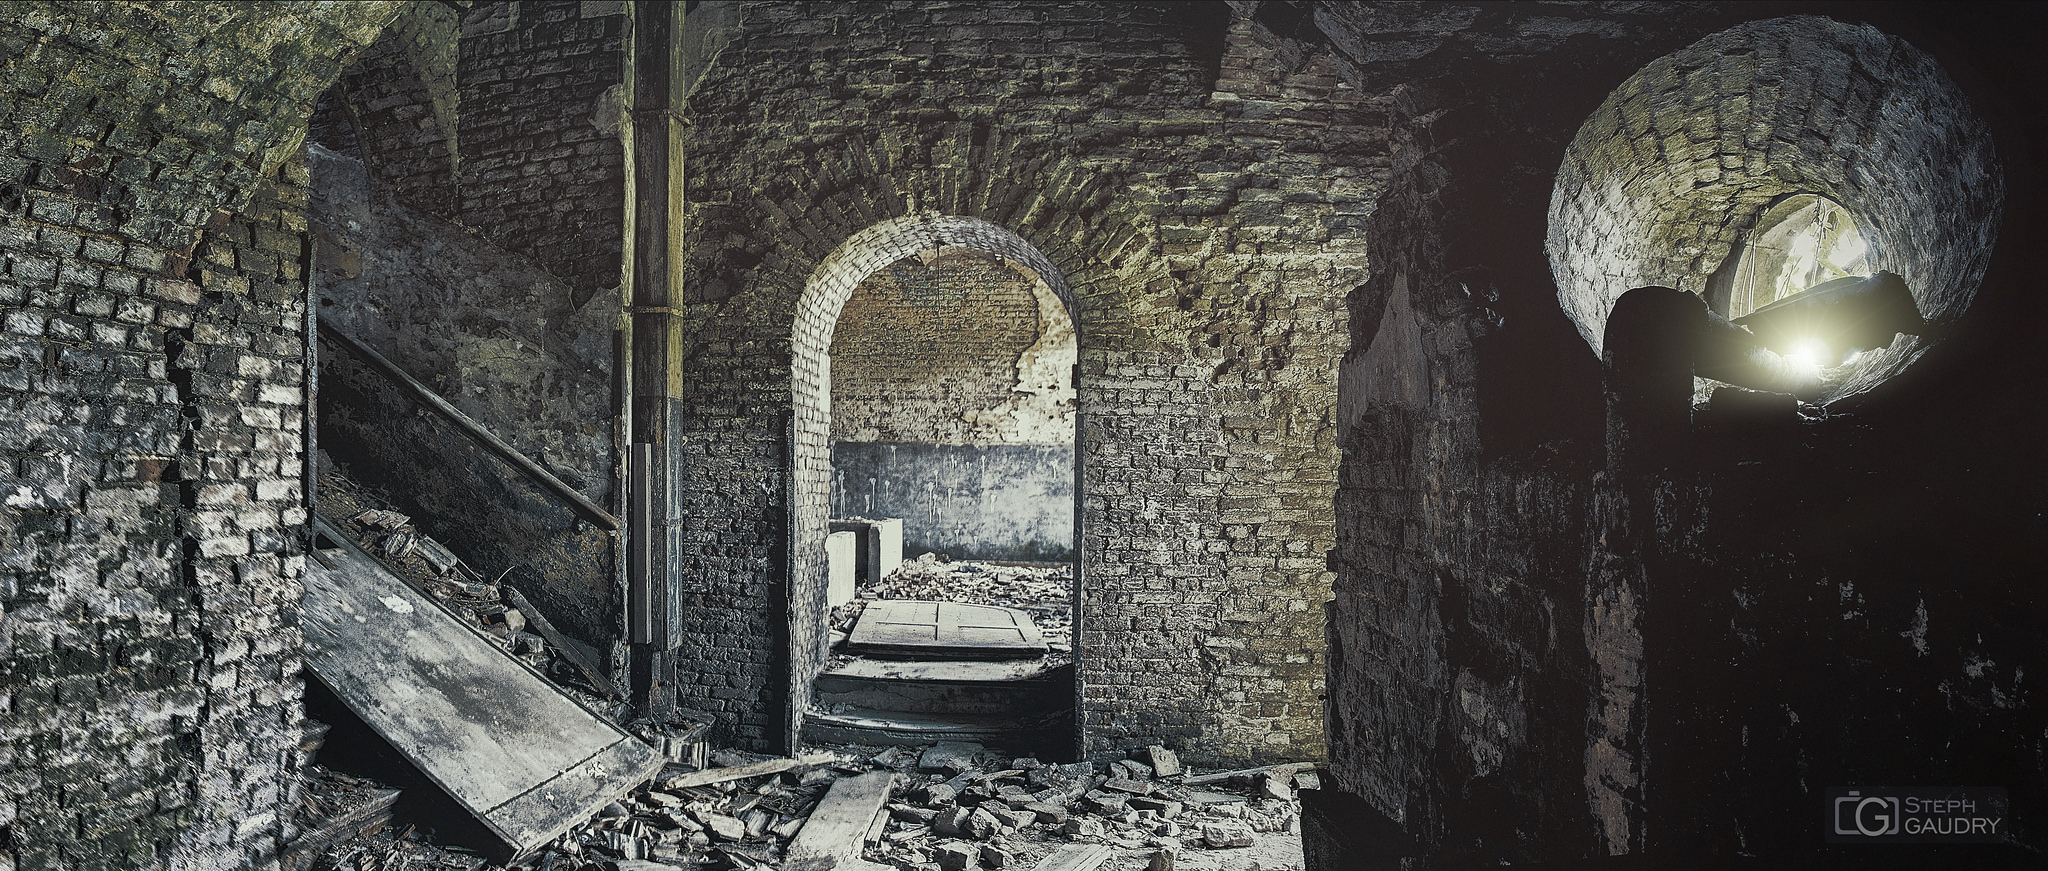 Fort de la chartreuse / The collapsed doors